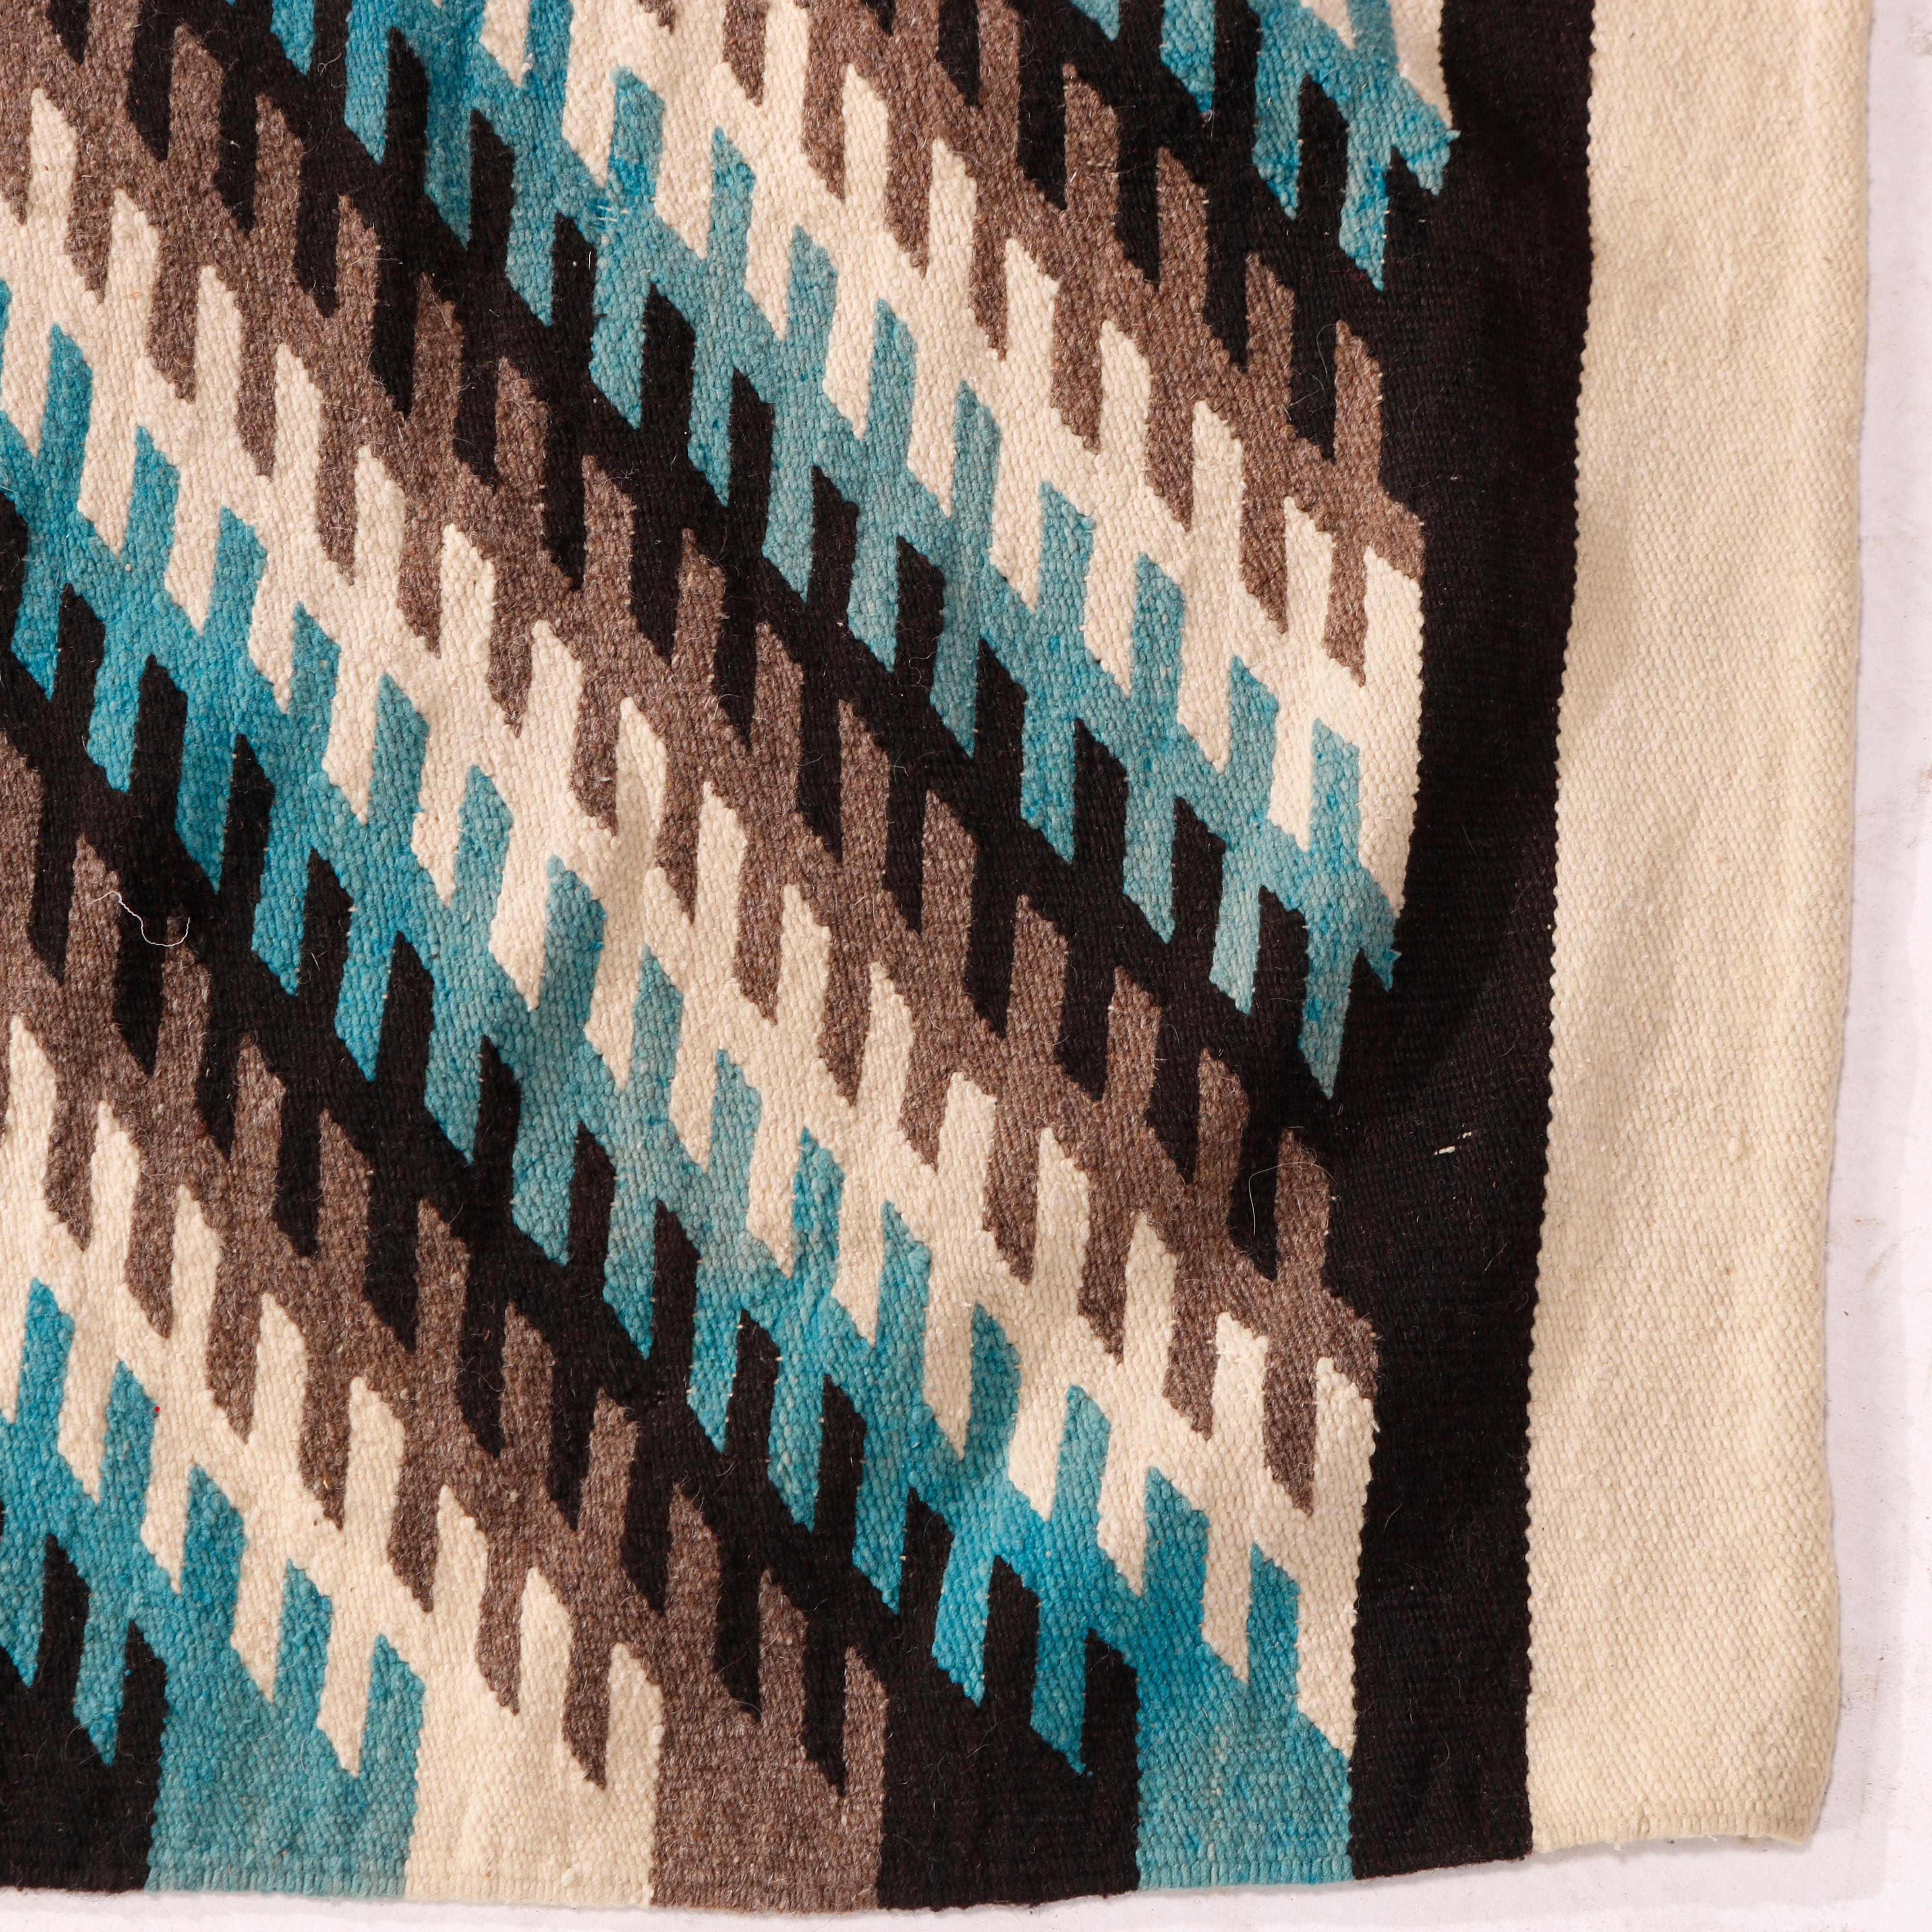 20th Century Southwestern American Indian Navajo Hand Woven Wool Rug, Stripe Pattern, c1920